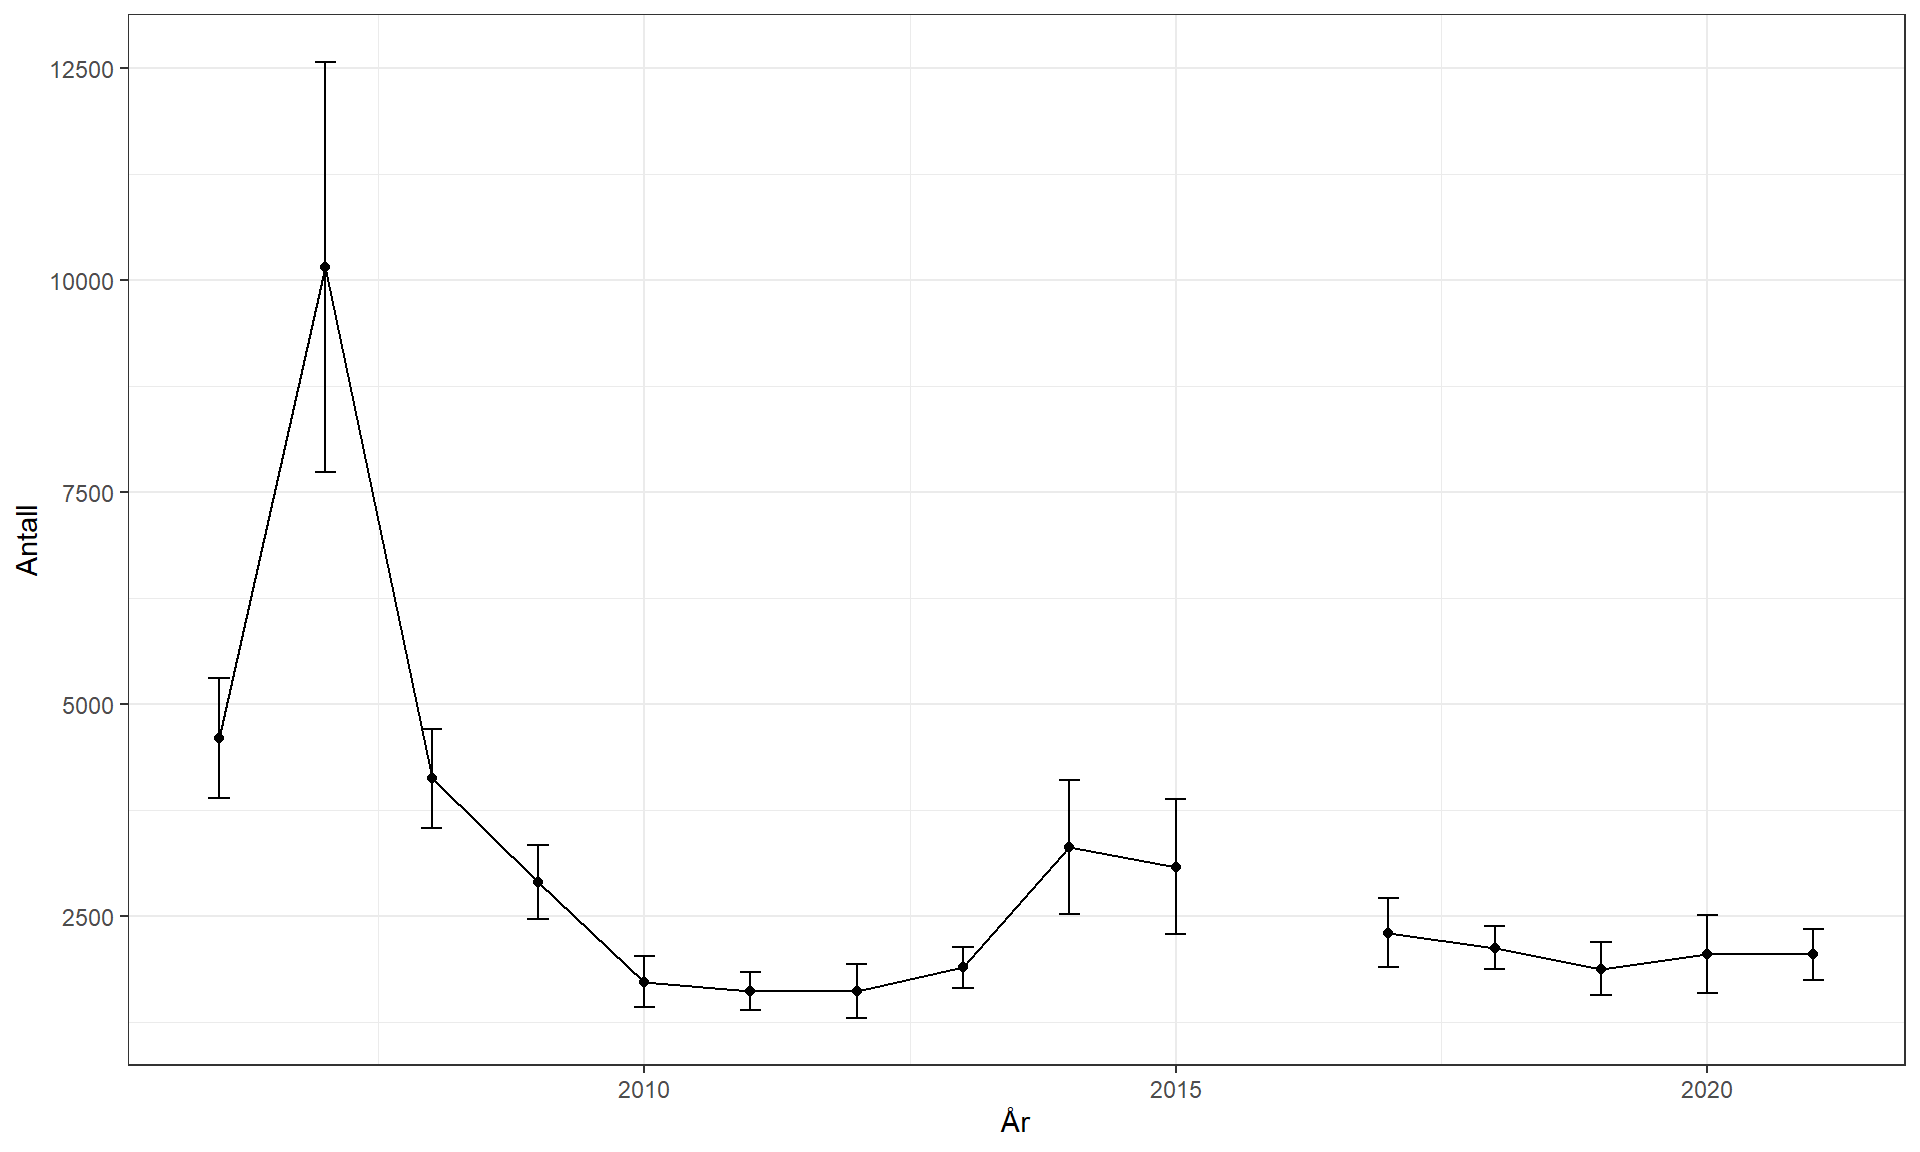 X-aksen viser år og går fra 2006 til 2021. Y-aksen viser antall  og går fra 0 til 12500.